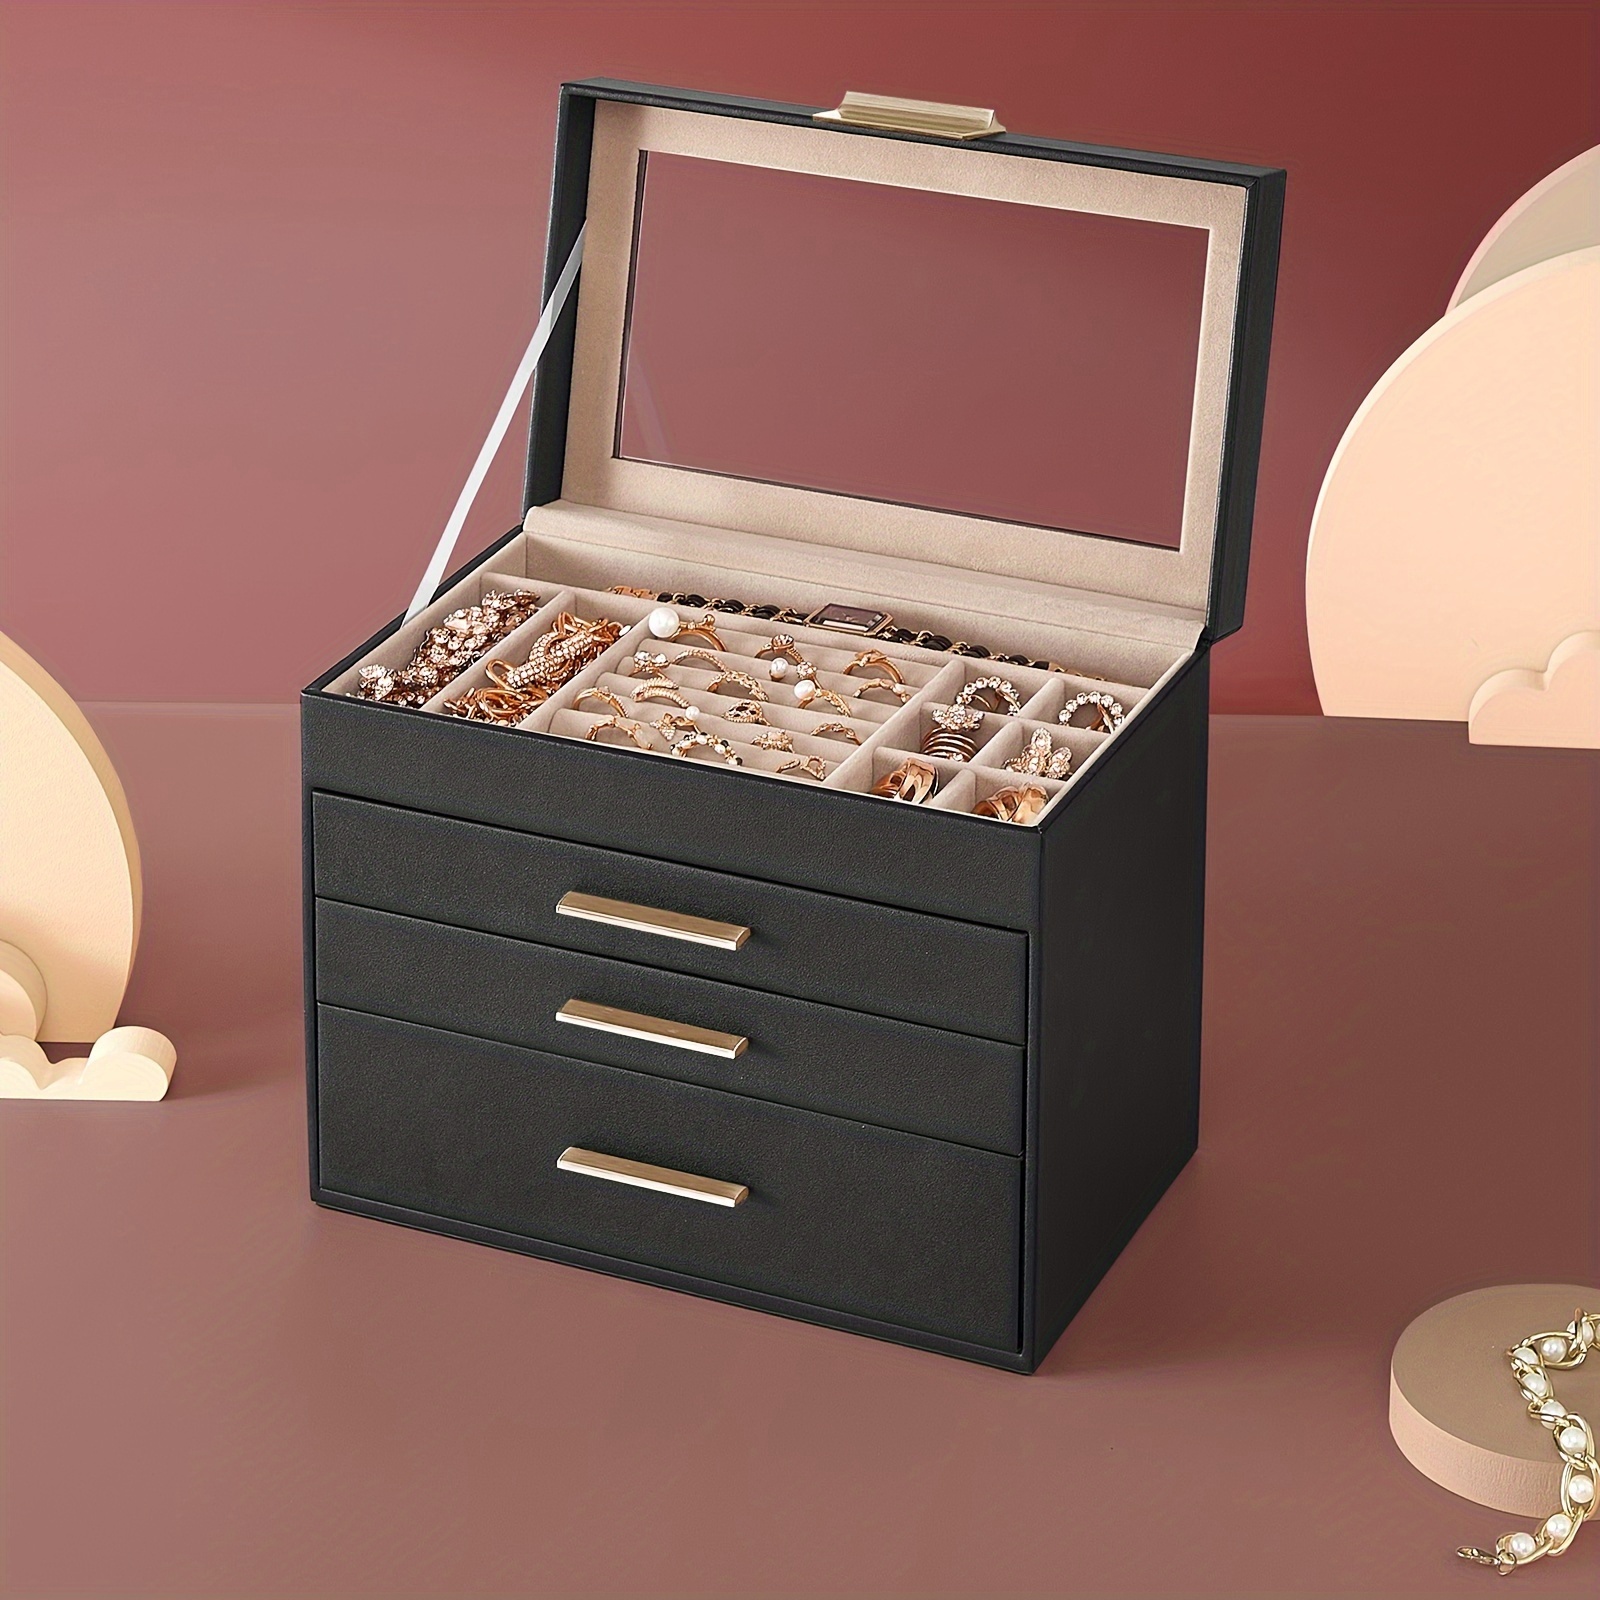 

1pc Jewelry Box With Glass Lid, 4-layer Jewelry Organizer With 3 Drawers, For Sunglasses, Jewelry Storage Organizer Box, Home Storage Supplies